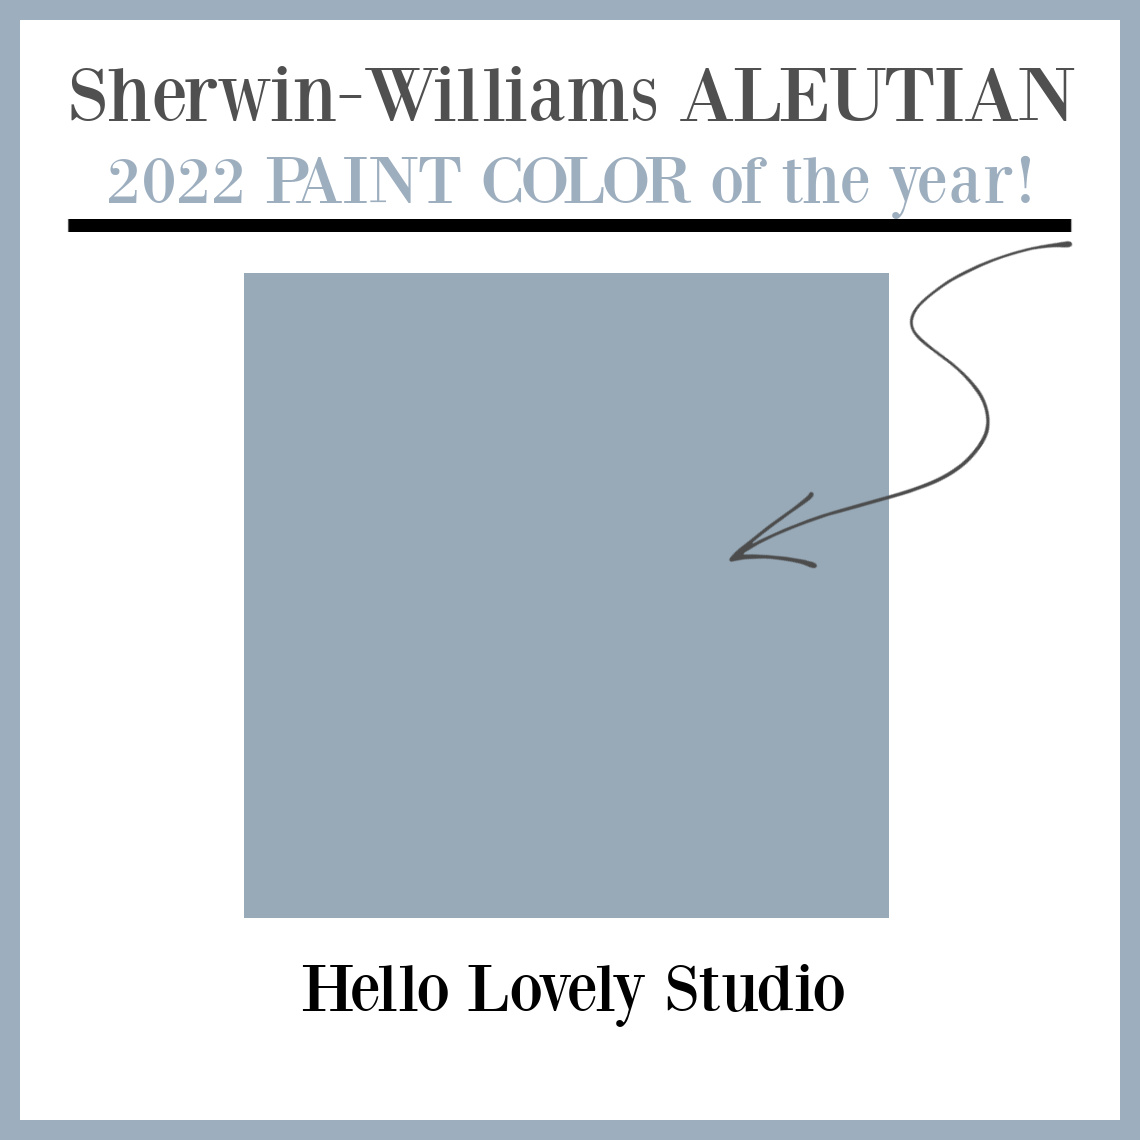 Aleutian (Sherwin-Williams) 2022 paint color of the year - Hello Lovely Studio. #aleutian #swaleutian #bluegraypaintcolors